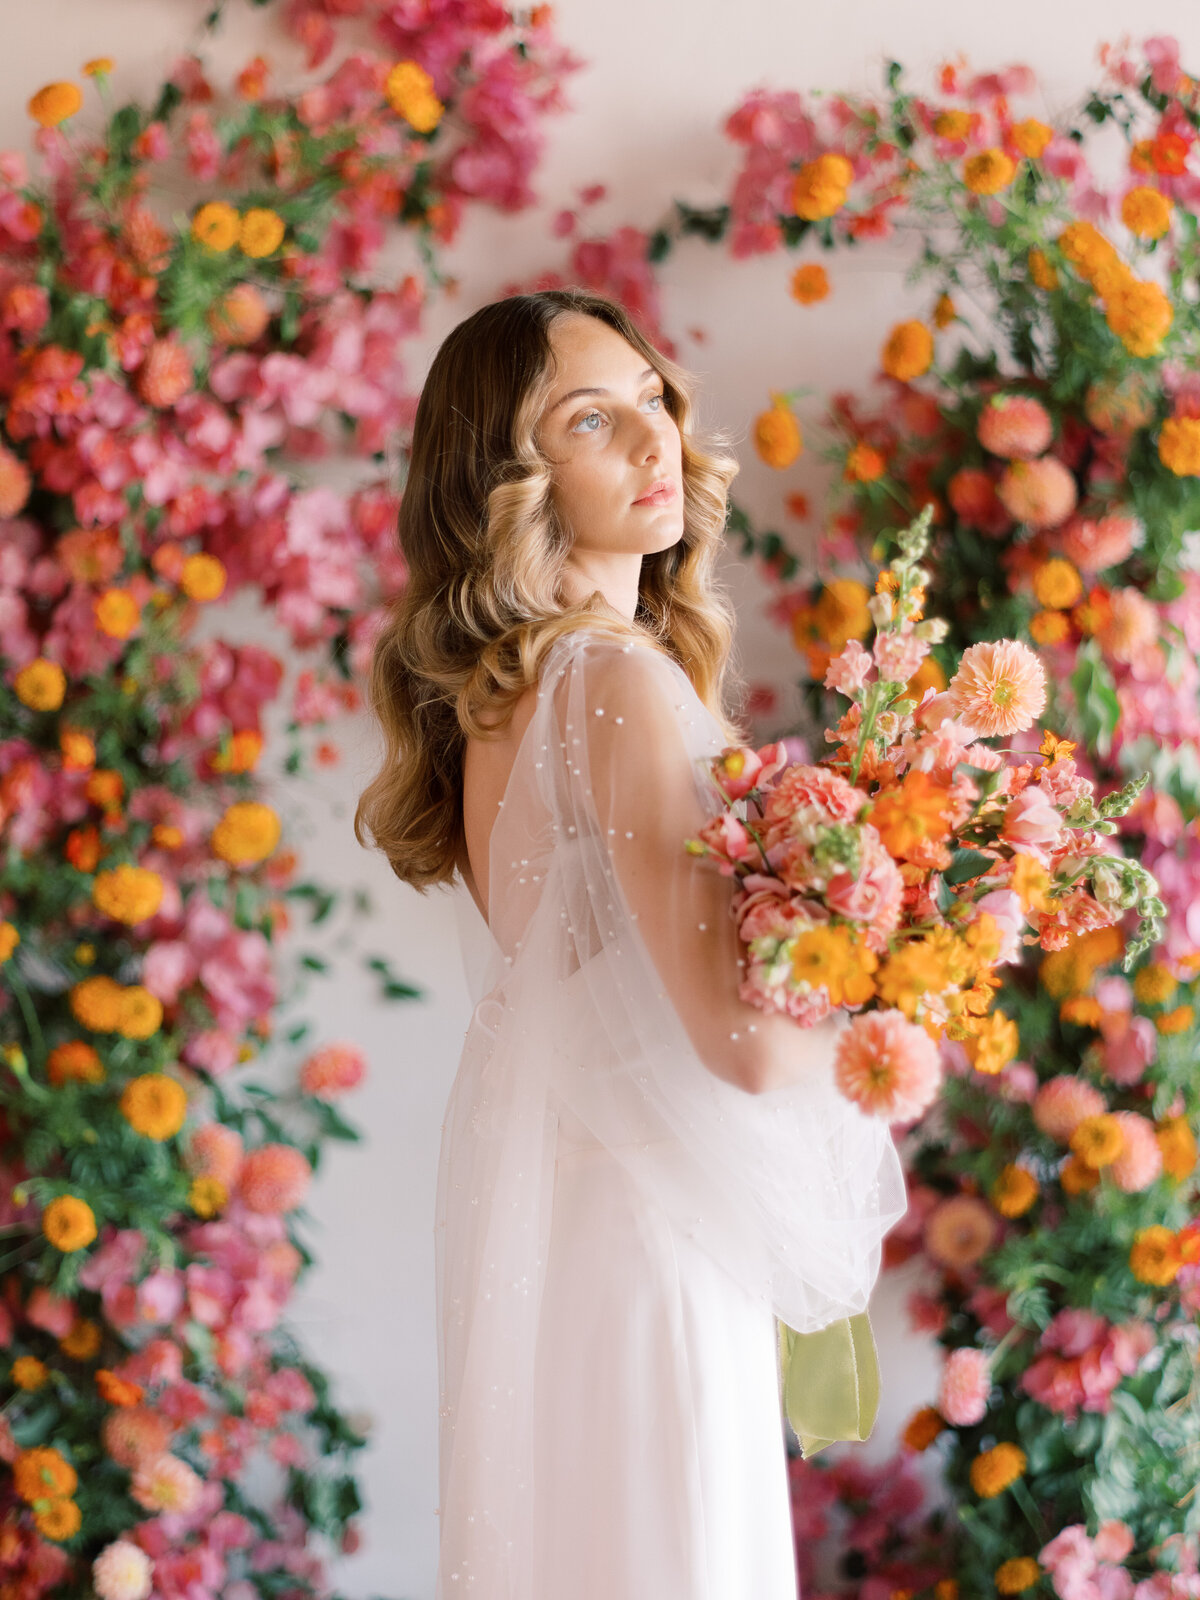 Sarah Rae Floral Designs Wedding Event Florist Flowers Kentucky Chic Whimsical Romantic Weddings31